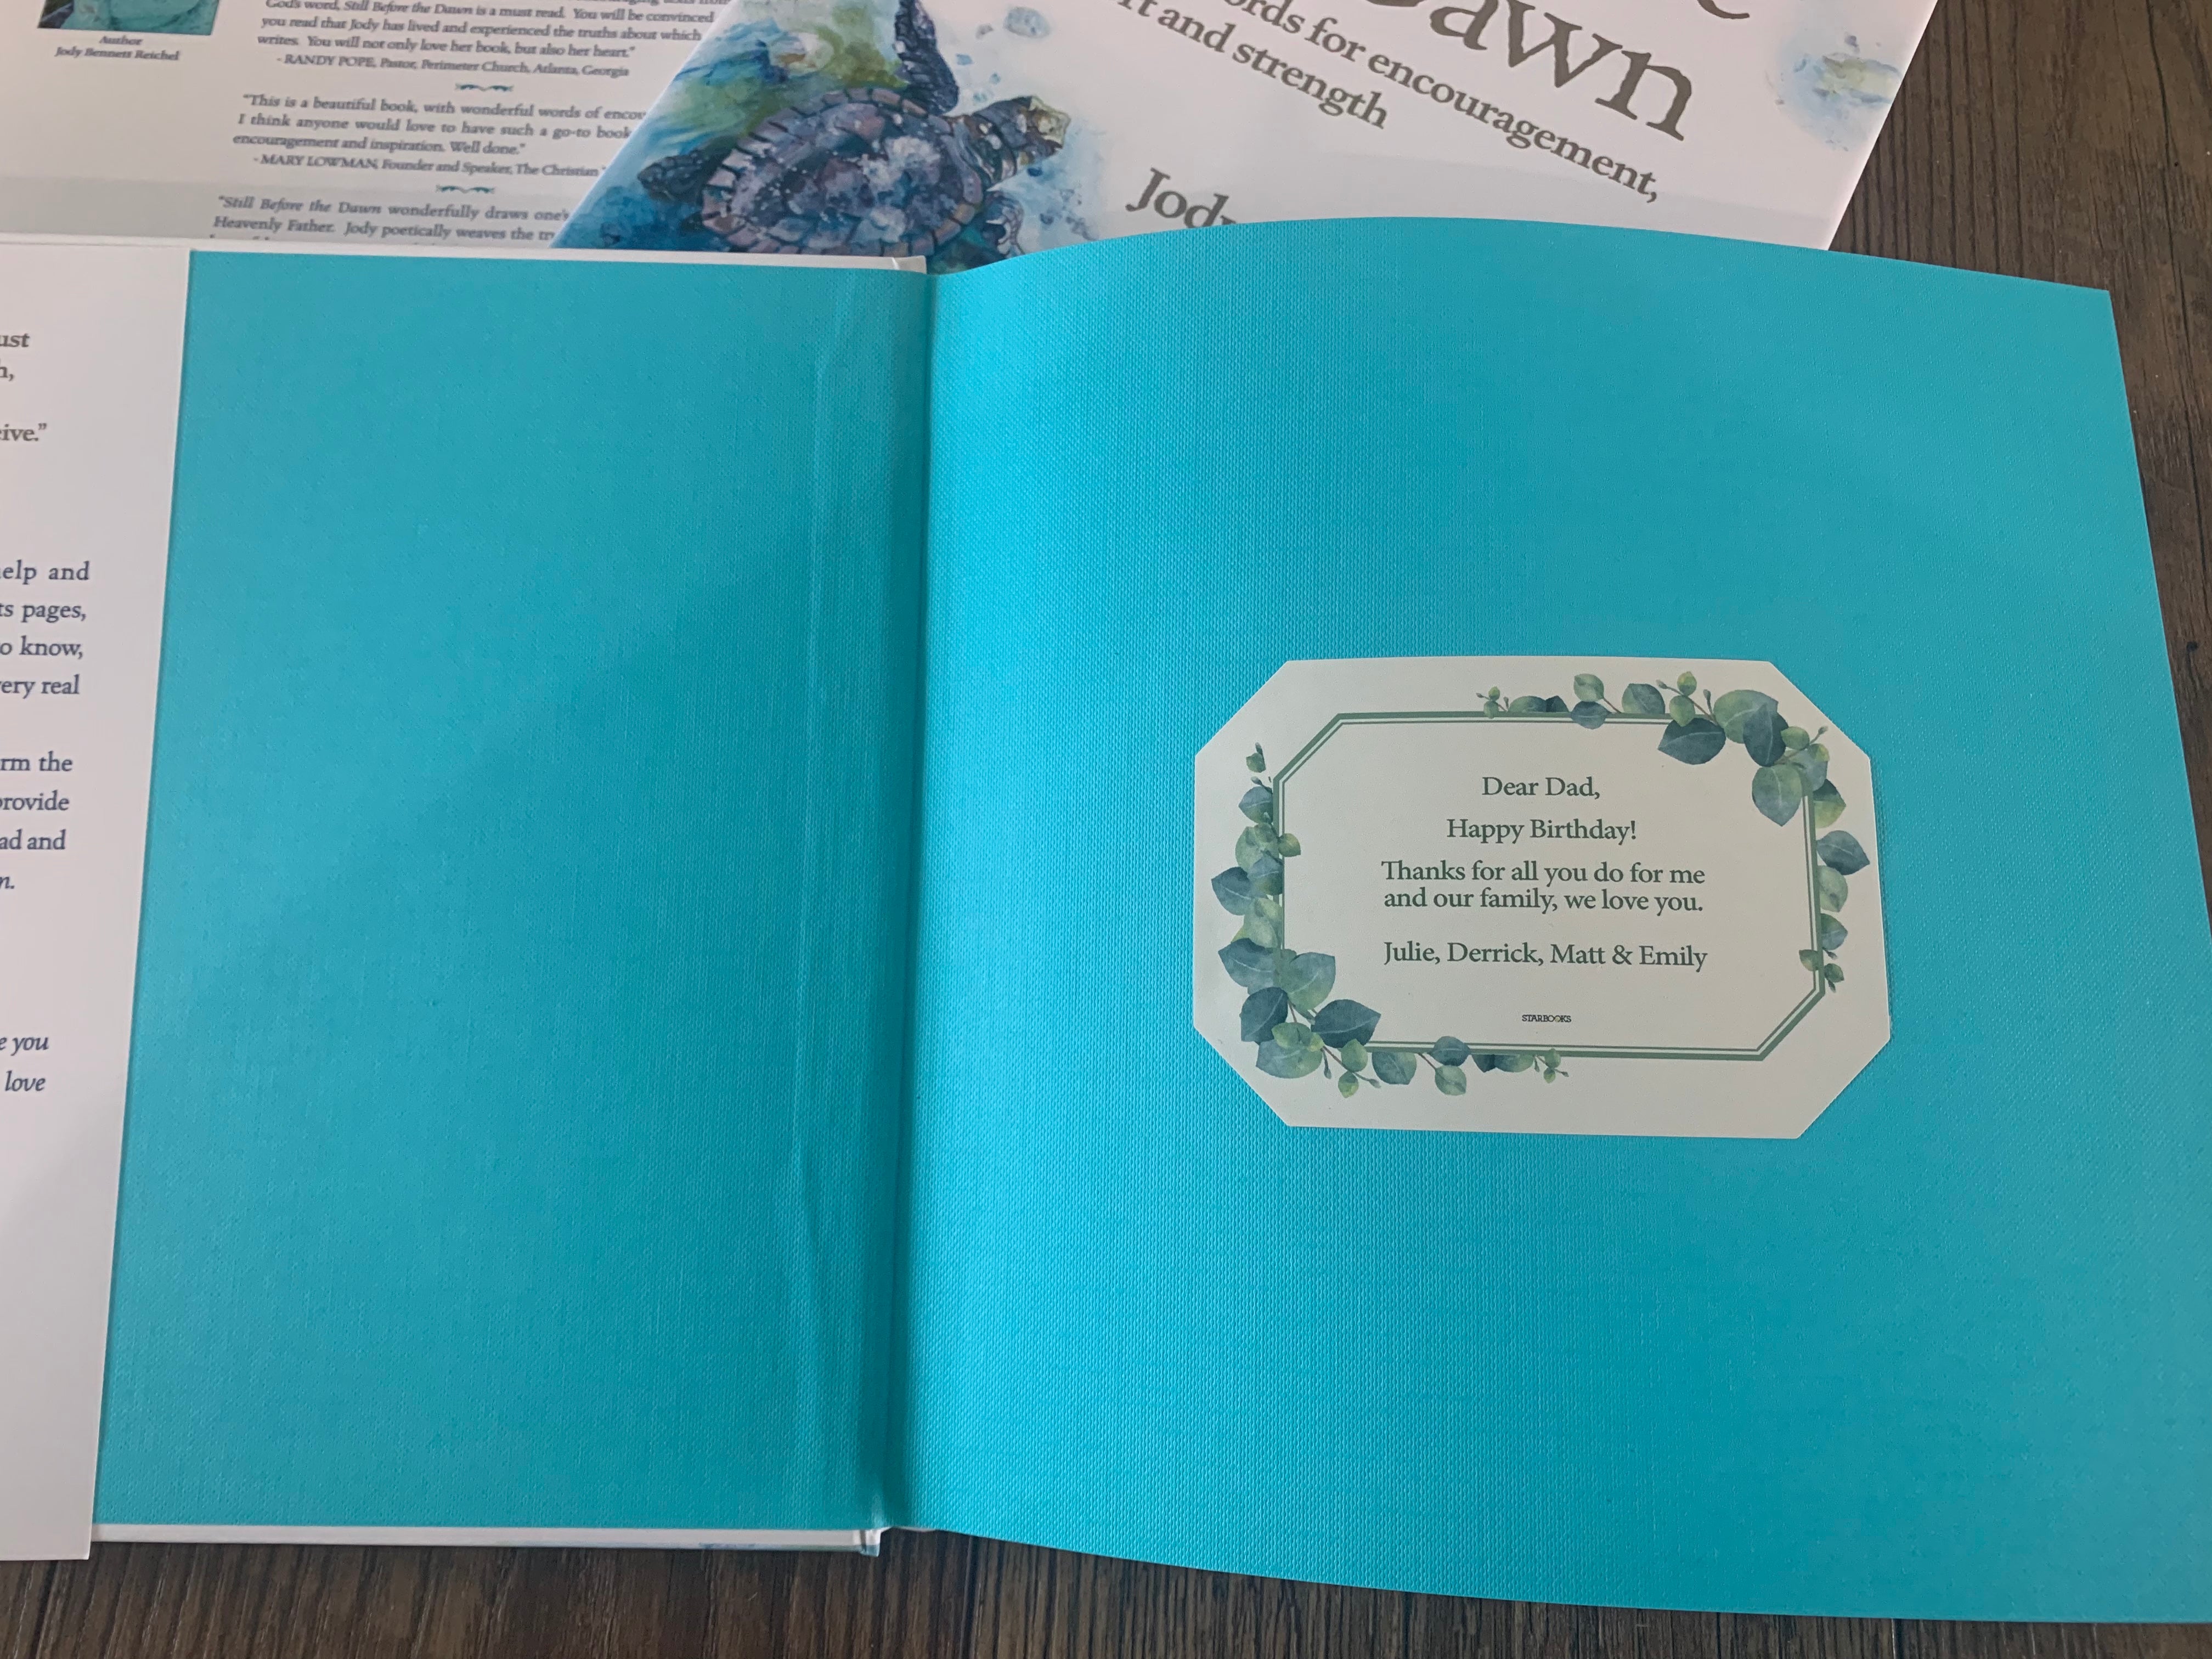 Sample-bookplate-inside-book-green-leaves